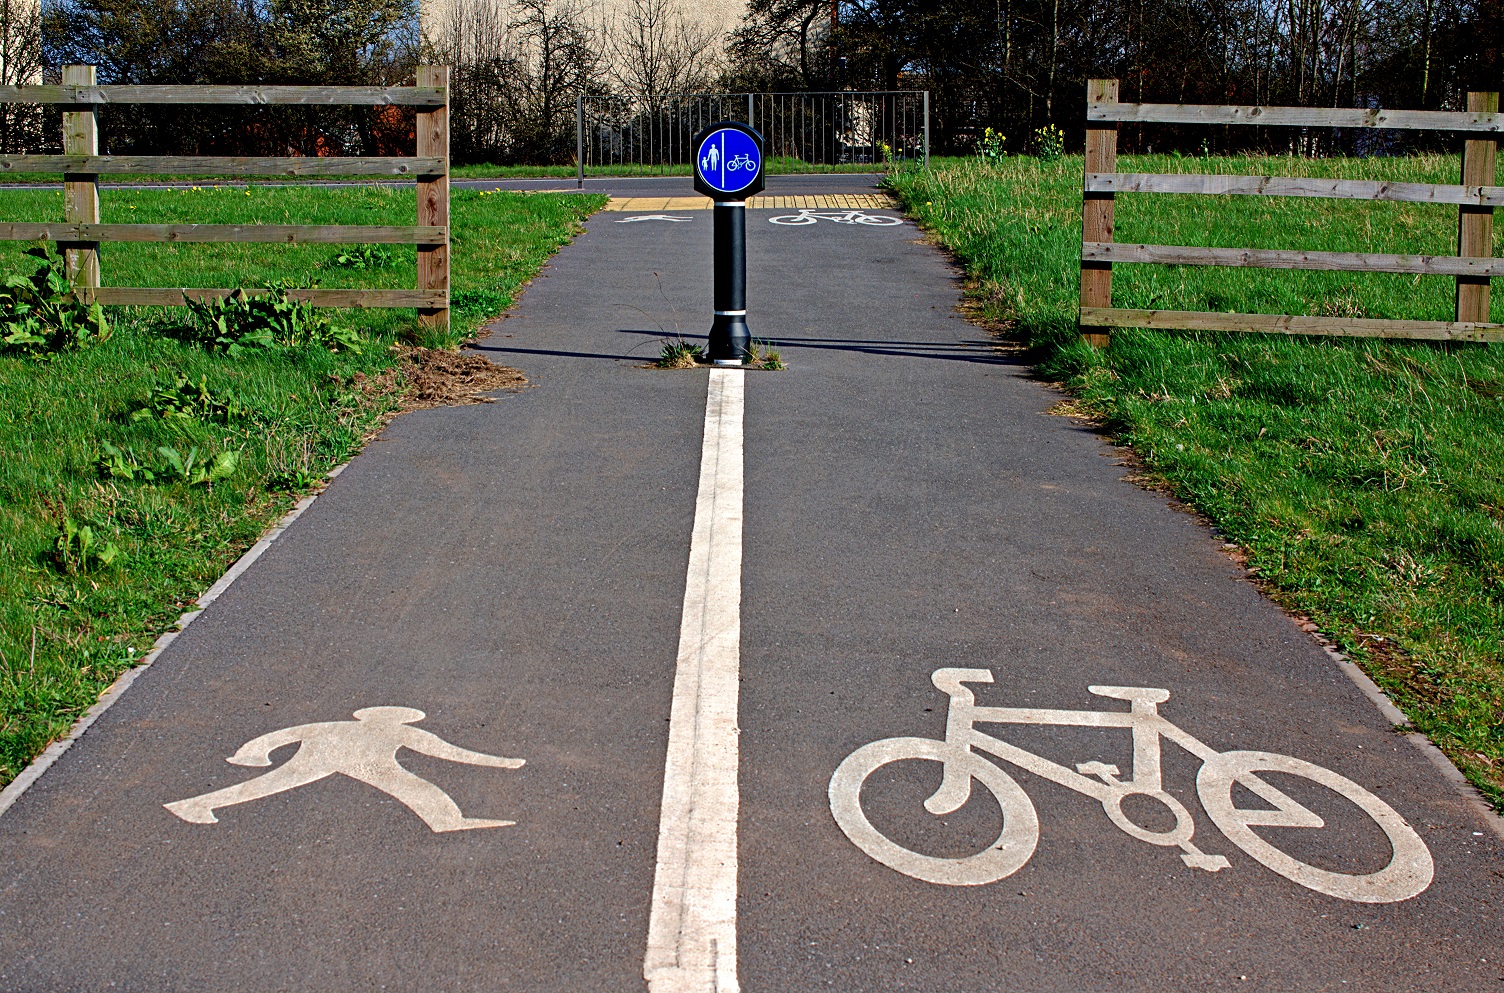 Shared walking and cycling path markings